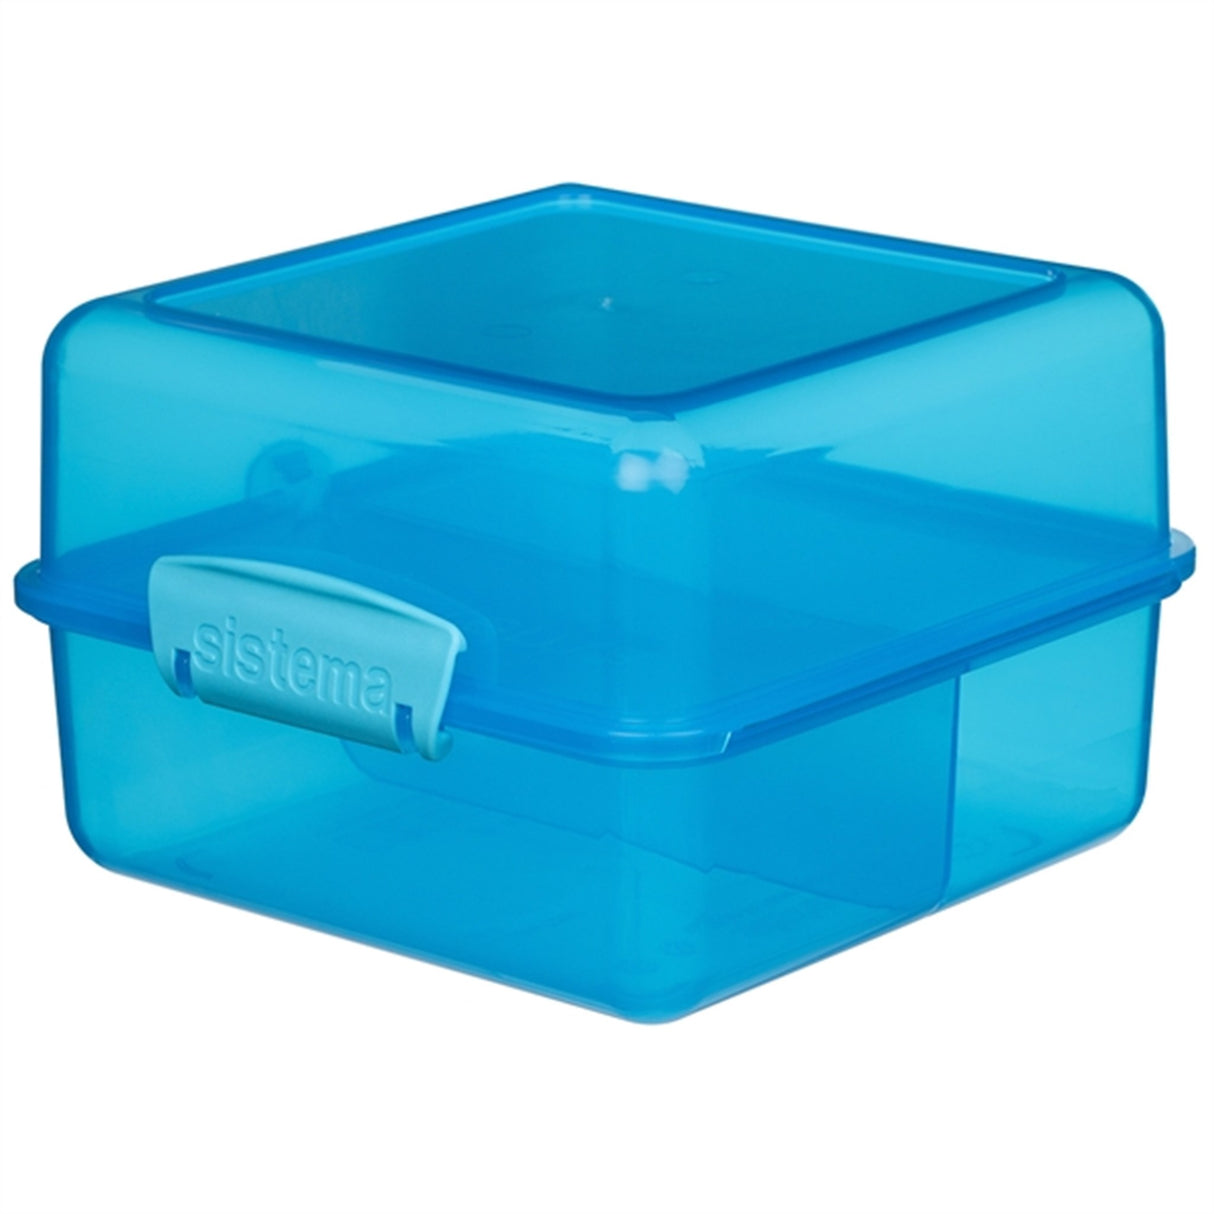 Sistema Lunch Cube Lunchlåda 1,4 L Blå